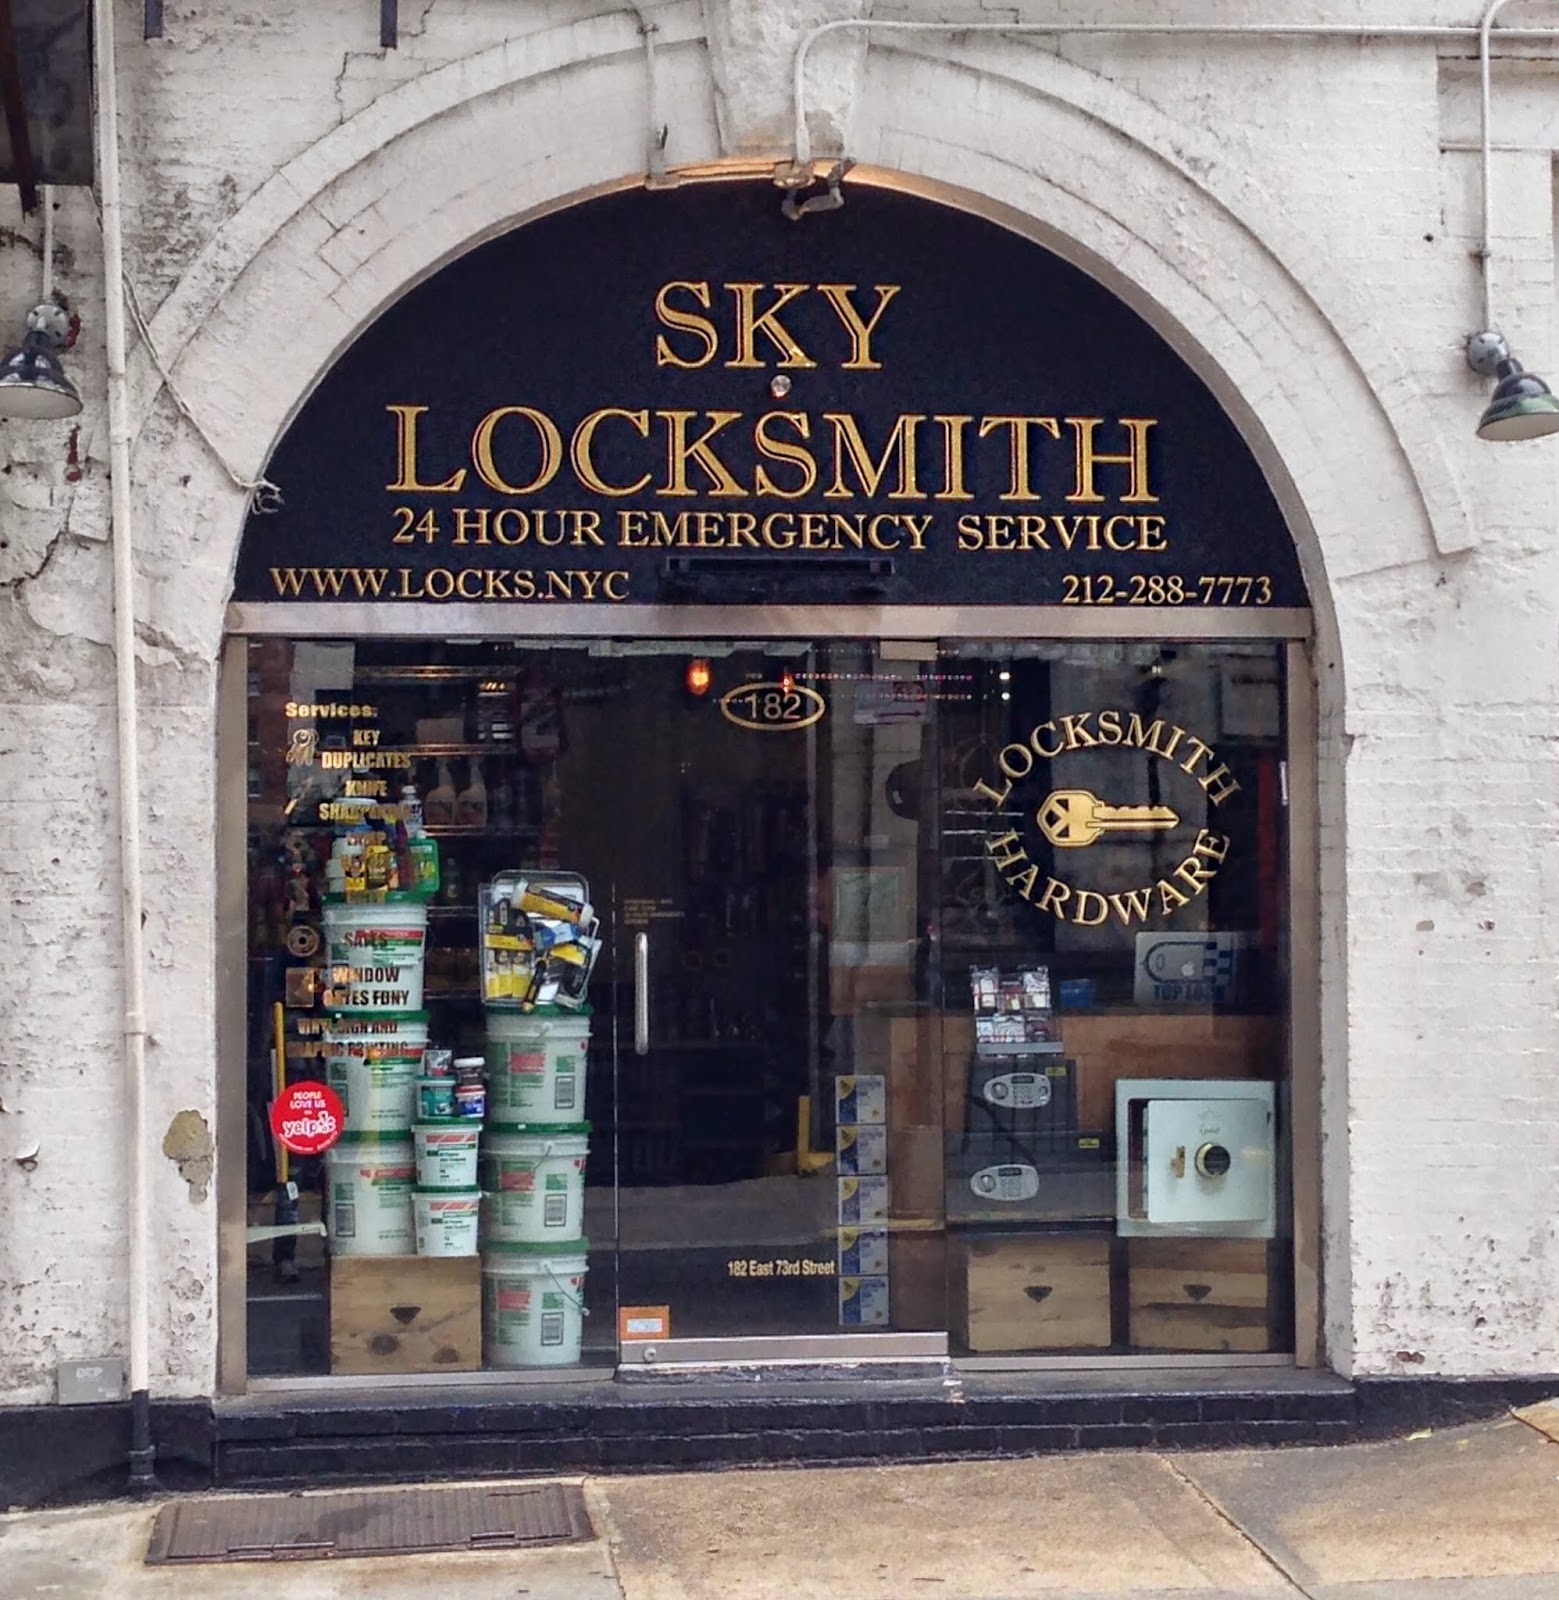 Photo of Sky Locksmith & Hardware in New York City, New York, United States - 1 Picture of Point of interest, Establishment, Store, Hardware store, Locksmith